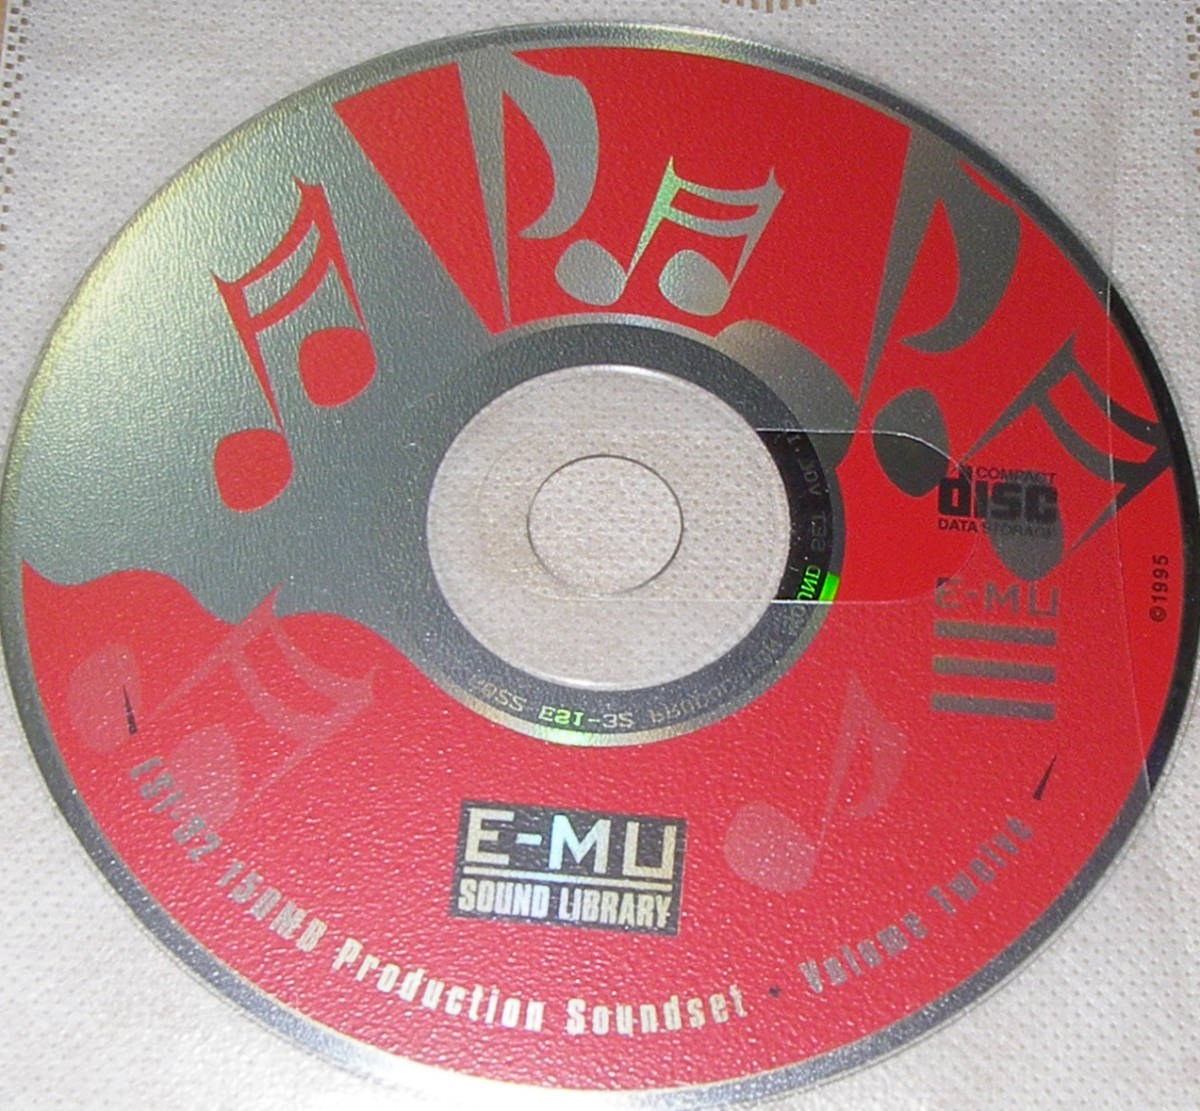 ★E-MU ESI-32 150MB PRODUCTION SOUND SET CD 01 SOUND LIBRARY (CD DATA STORAGE)★_画像2